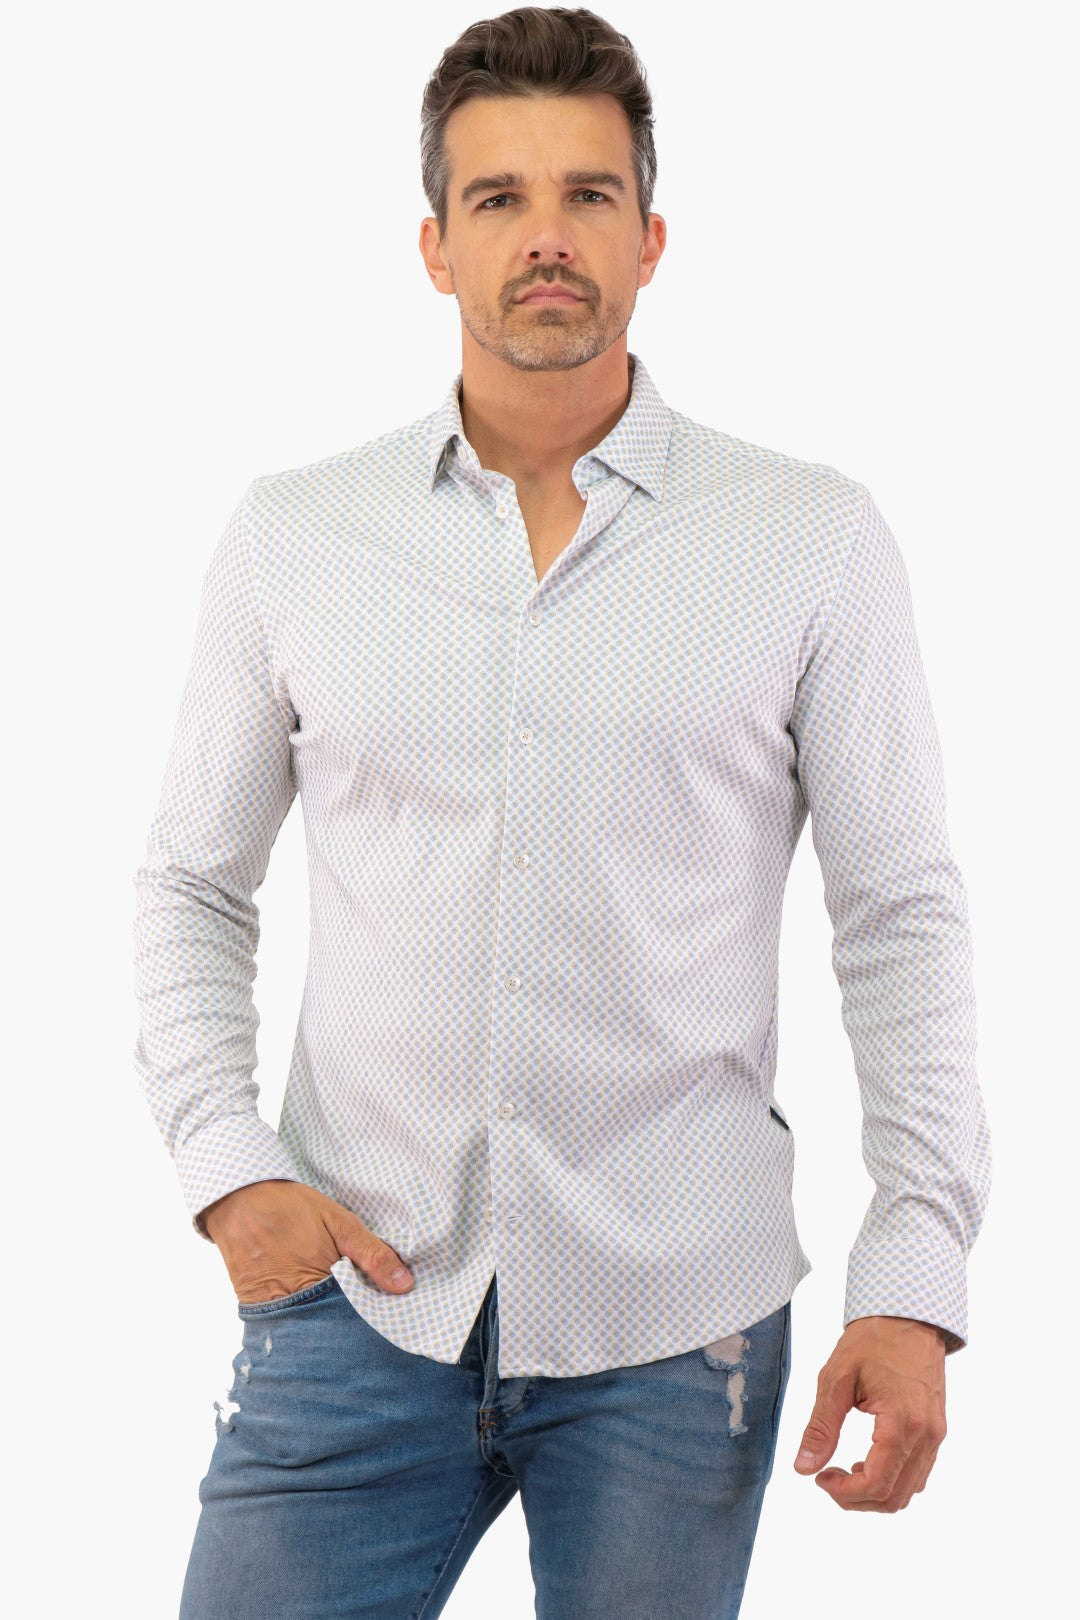 Hörst Long Sleeve Shirt in Beige color (Off-Hrsl241708-203)